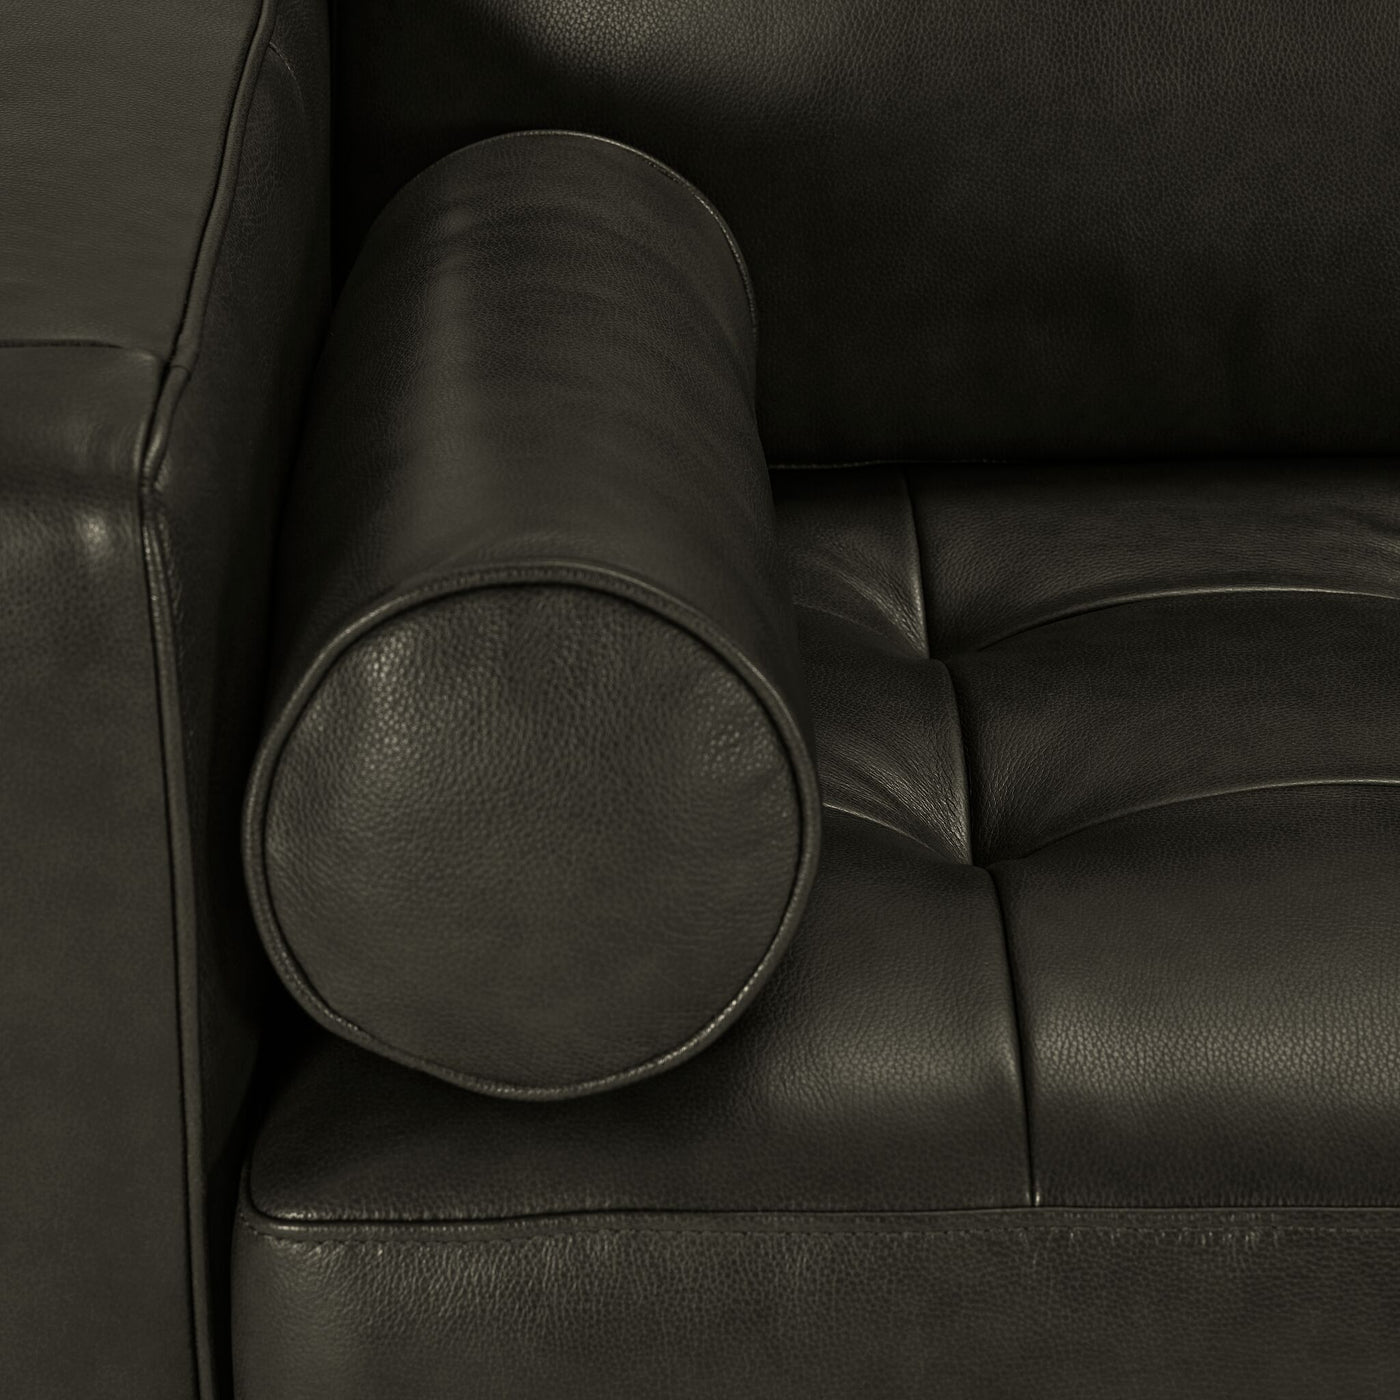 Bari Leather Chair - Charcoal